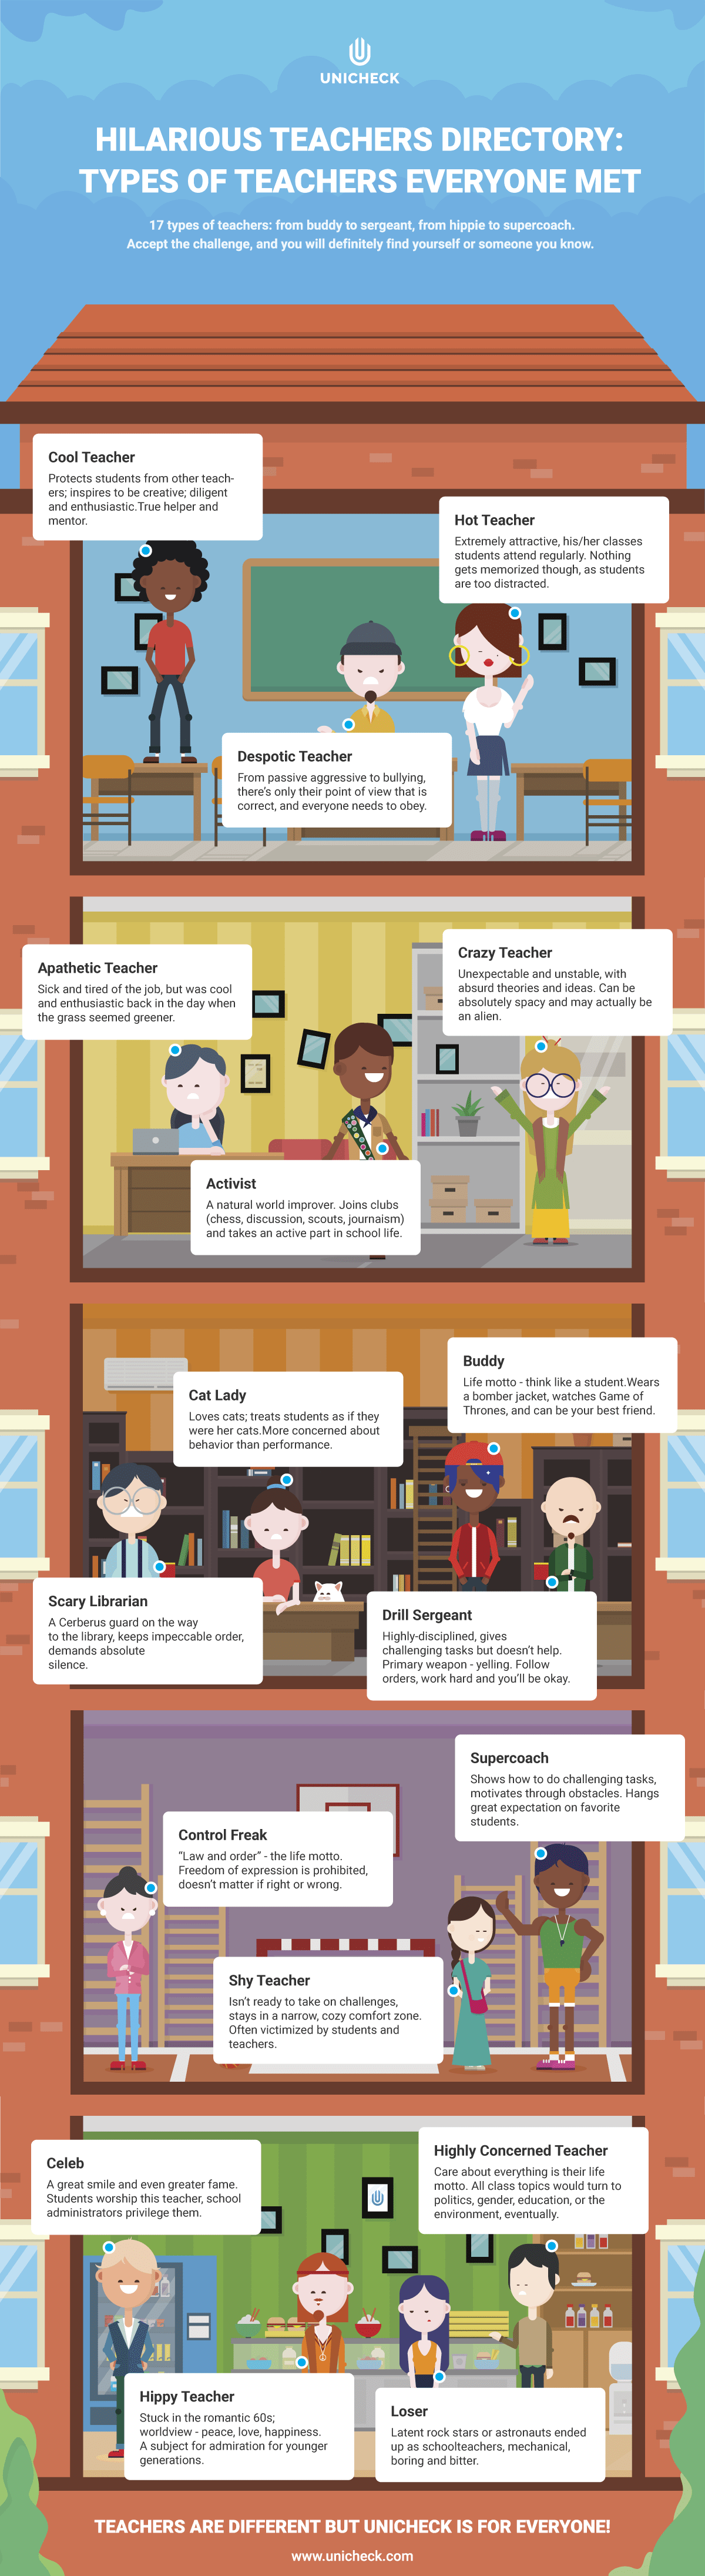 Teacher-types-directory-infographic